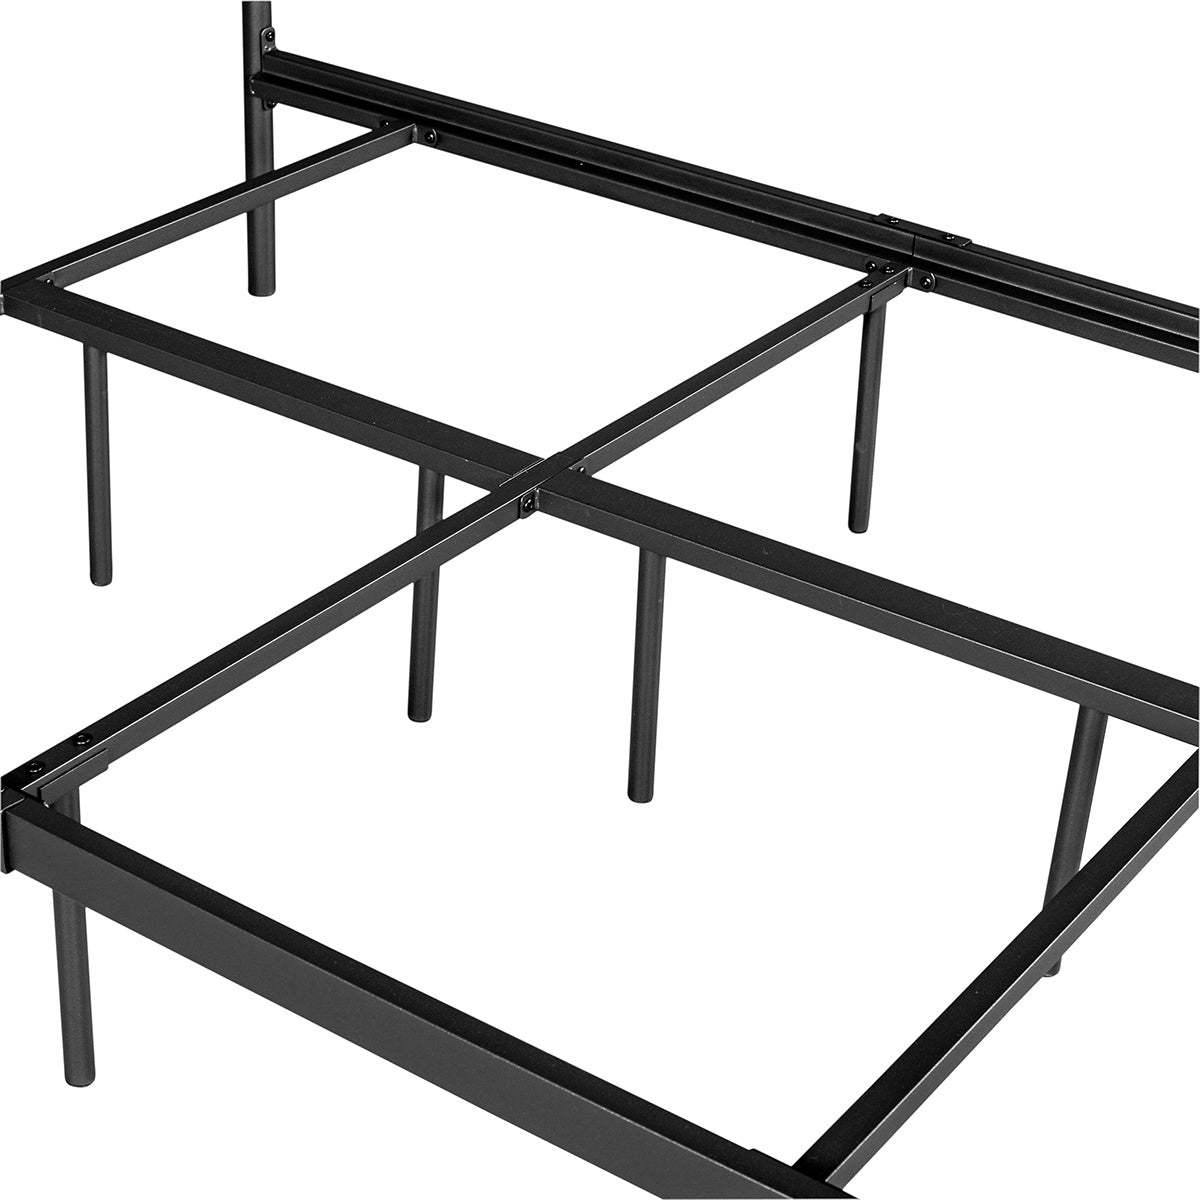 Metal Bed Frame Queen Size Standerd Bed Frame